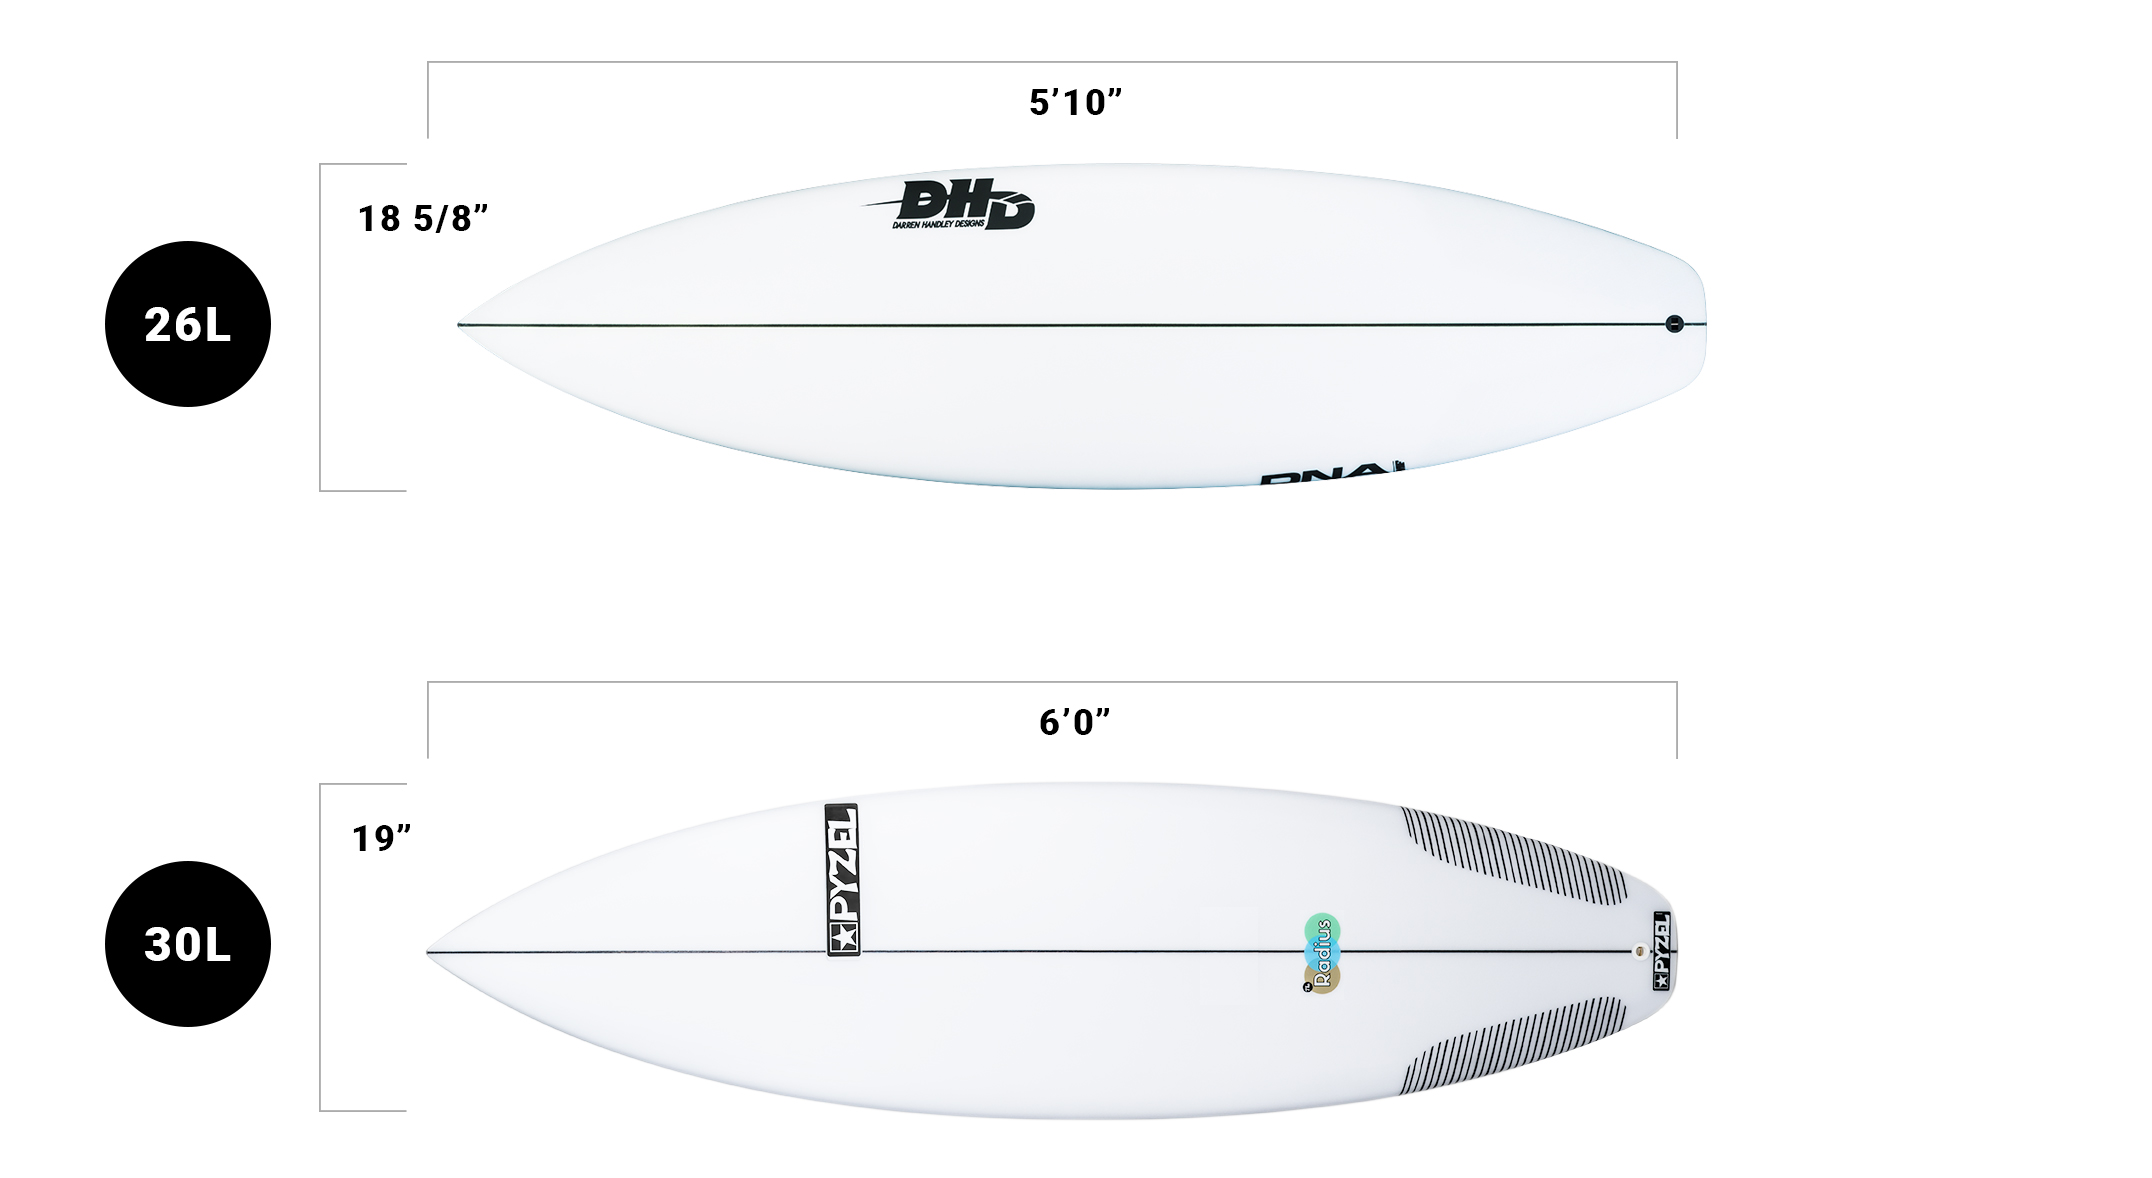 Retro Fish Surfboard Size Chart